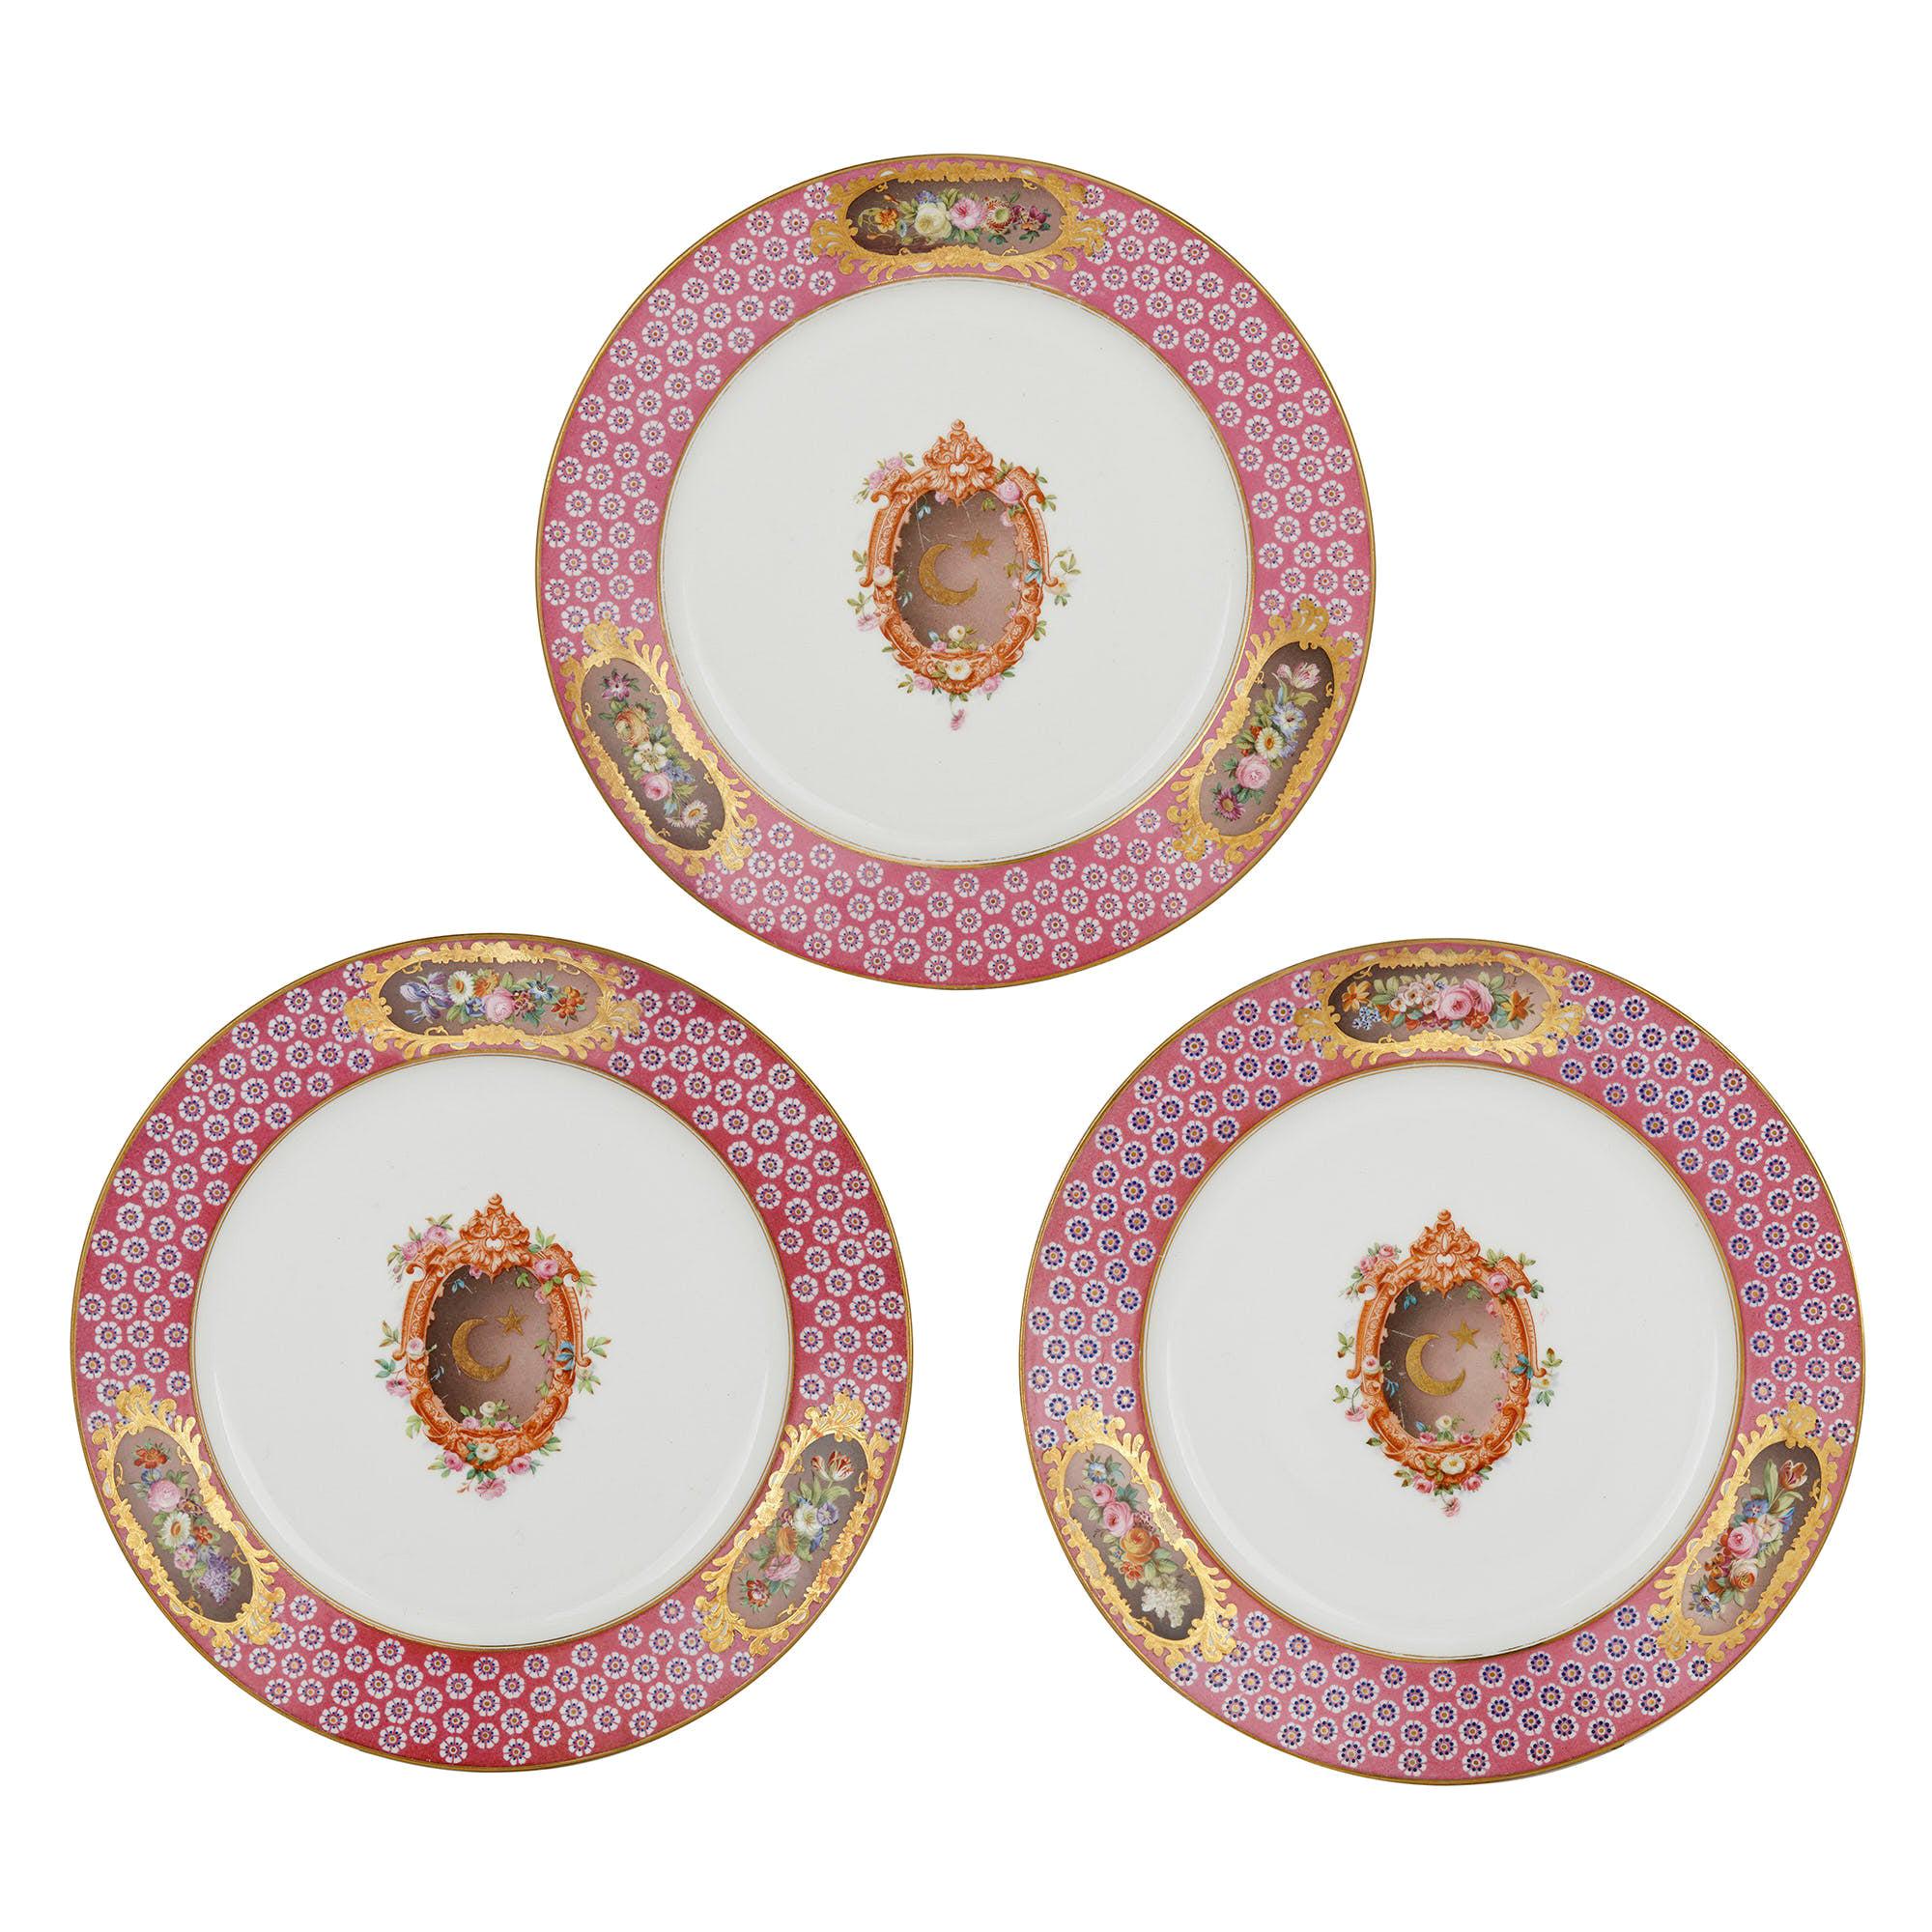 Three Sèvres Plates of Islamic Interest